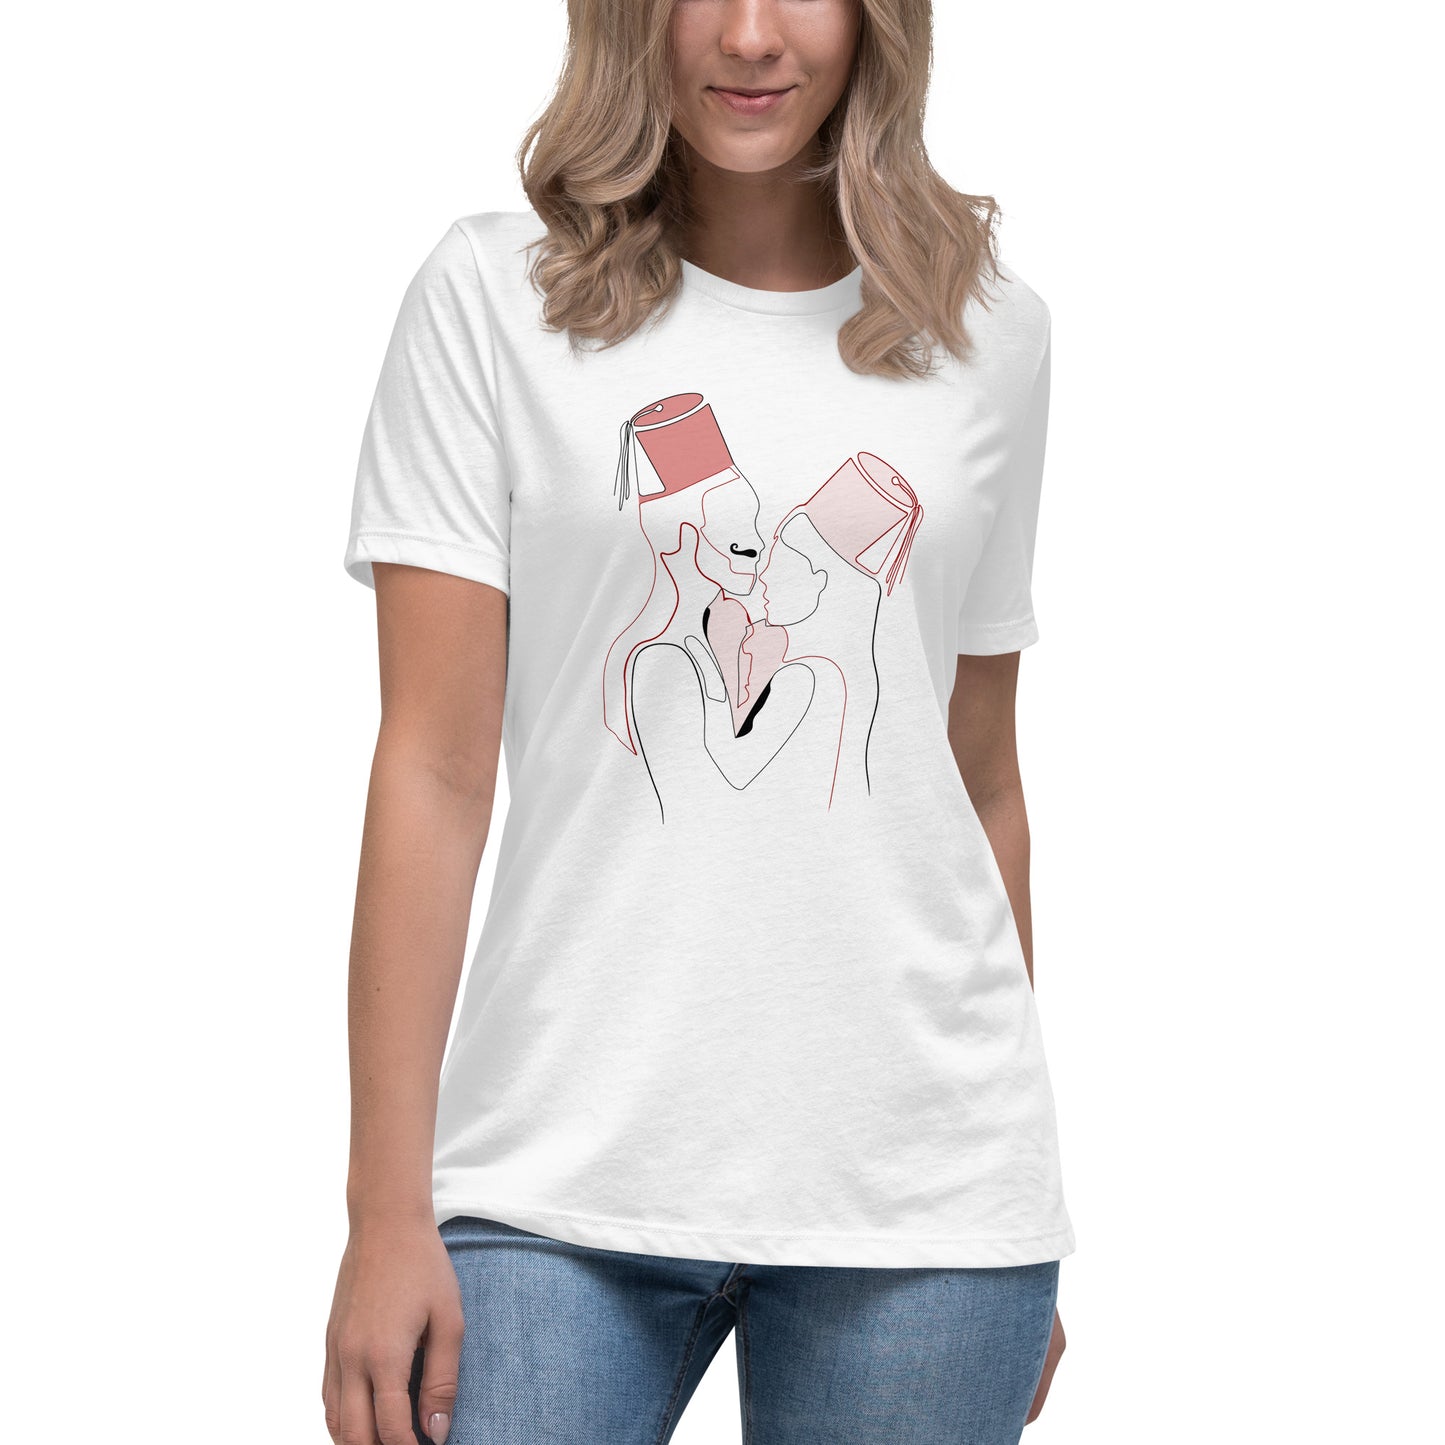 In Love T-Shirt